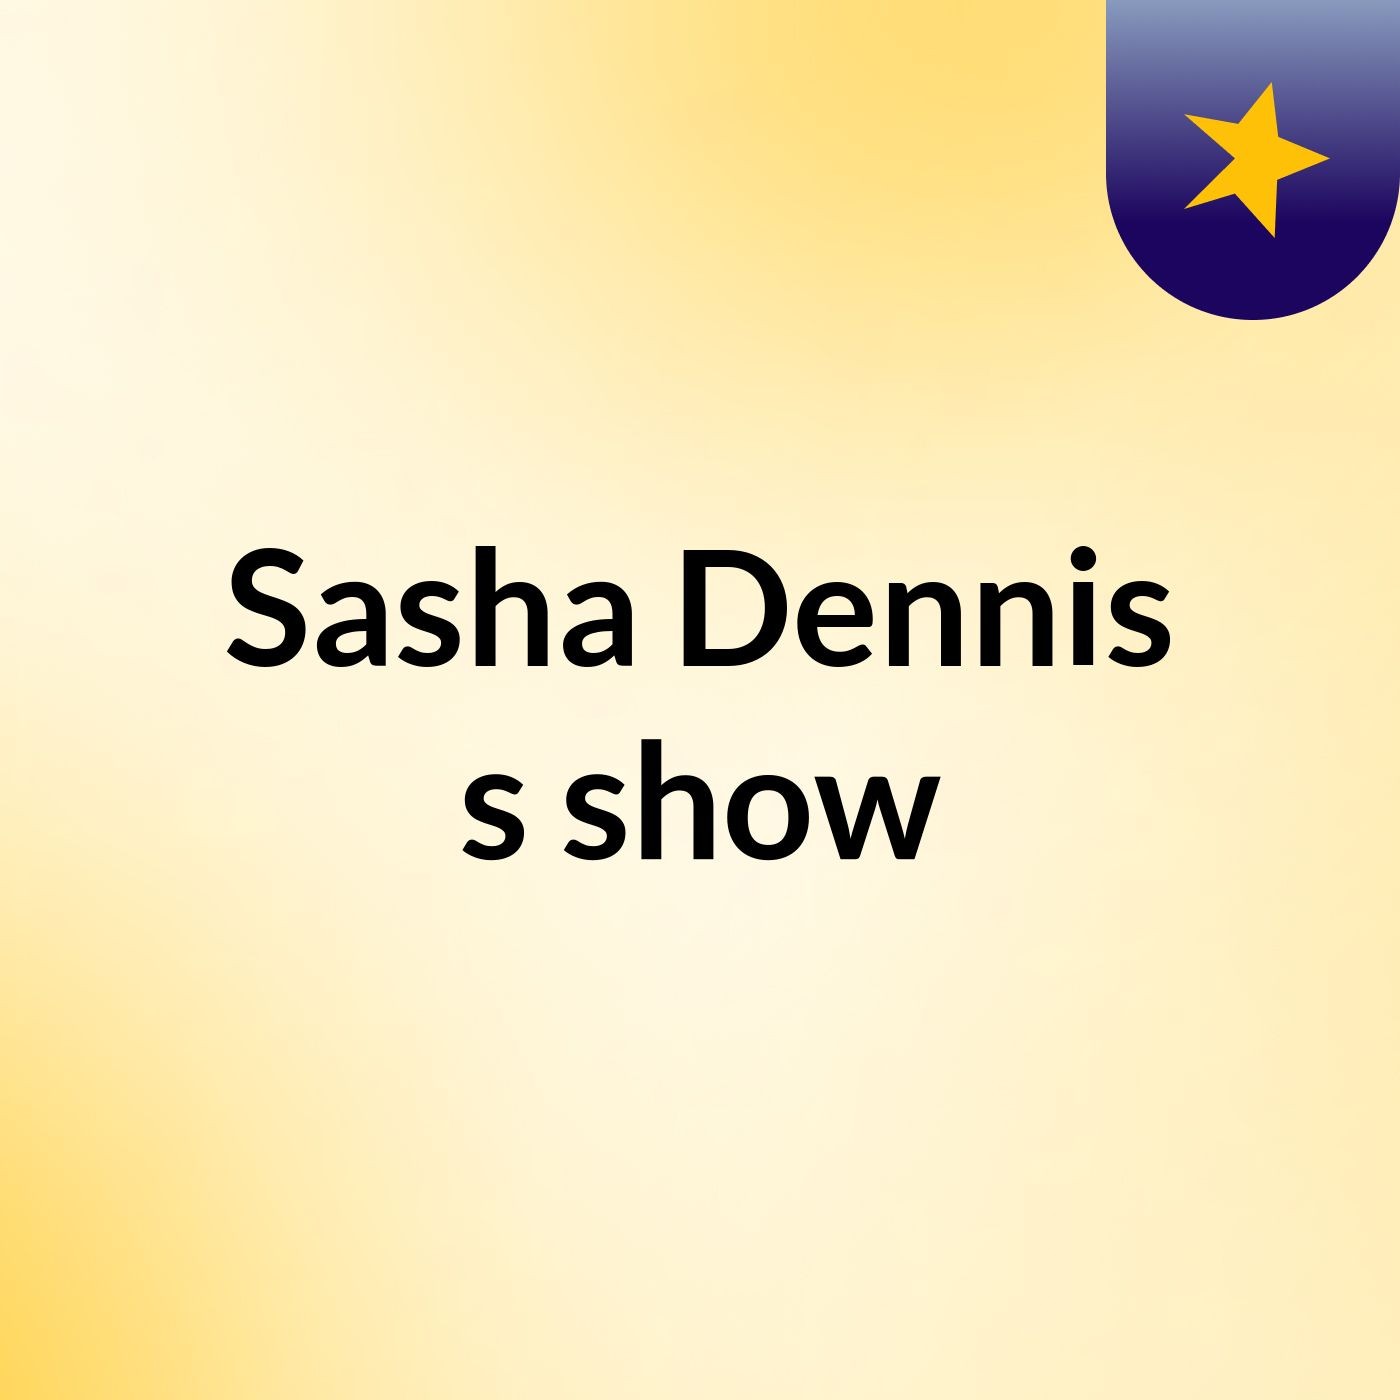 Sasha Dennis's show